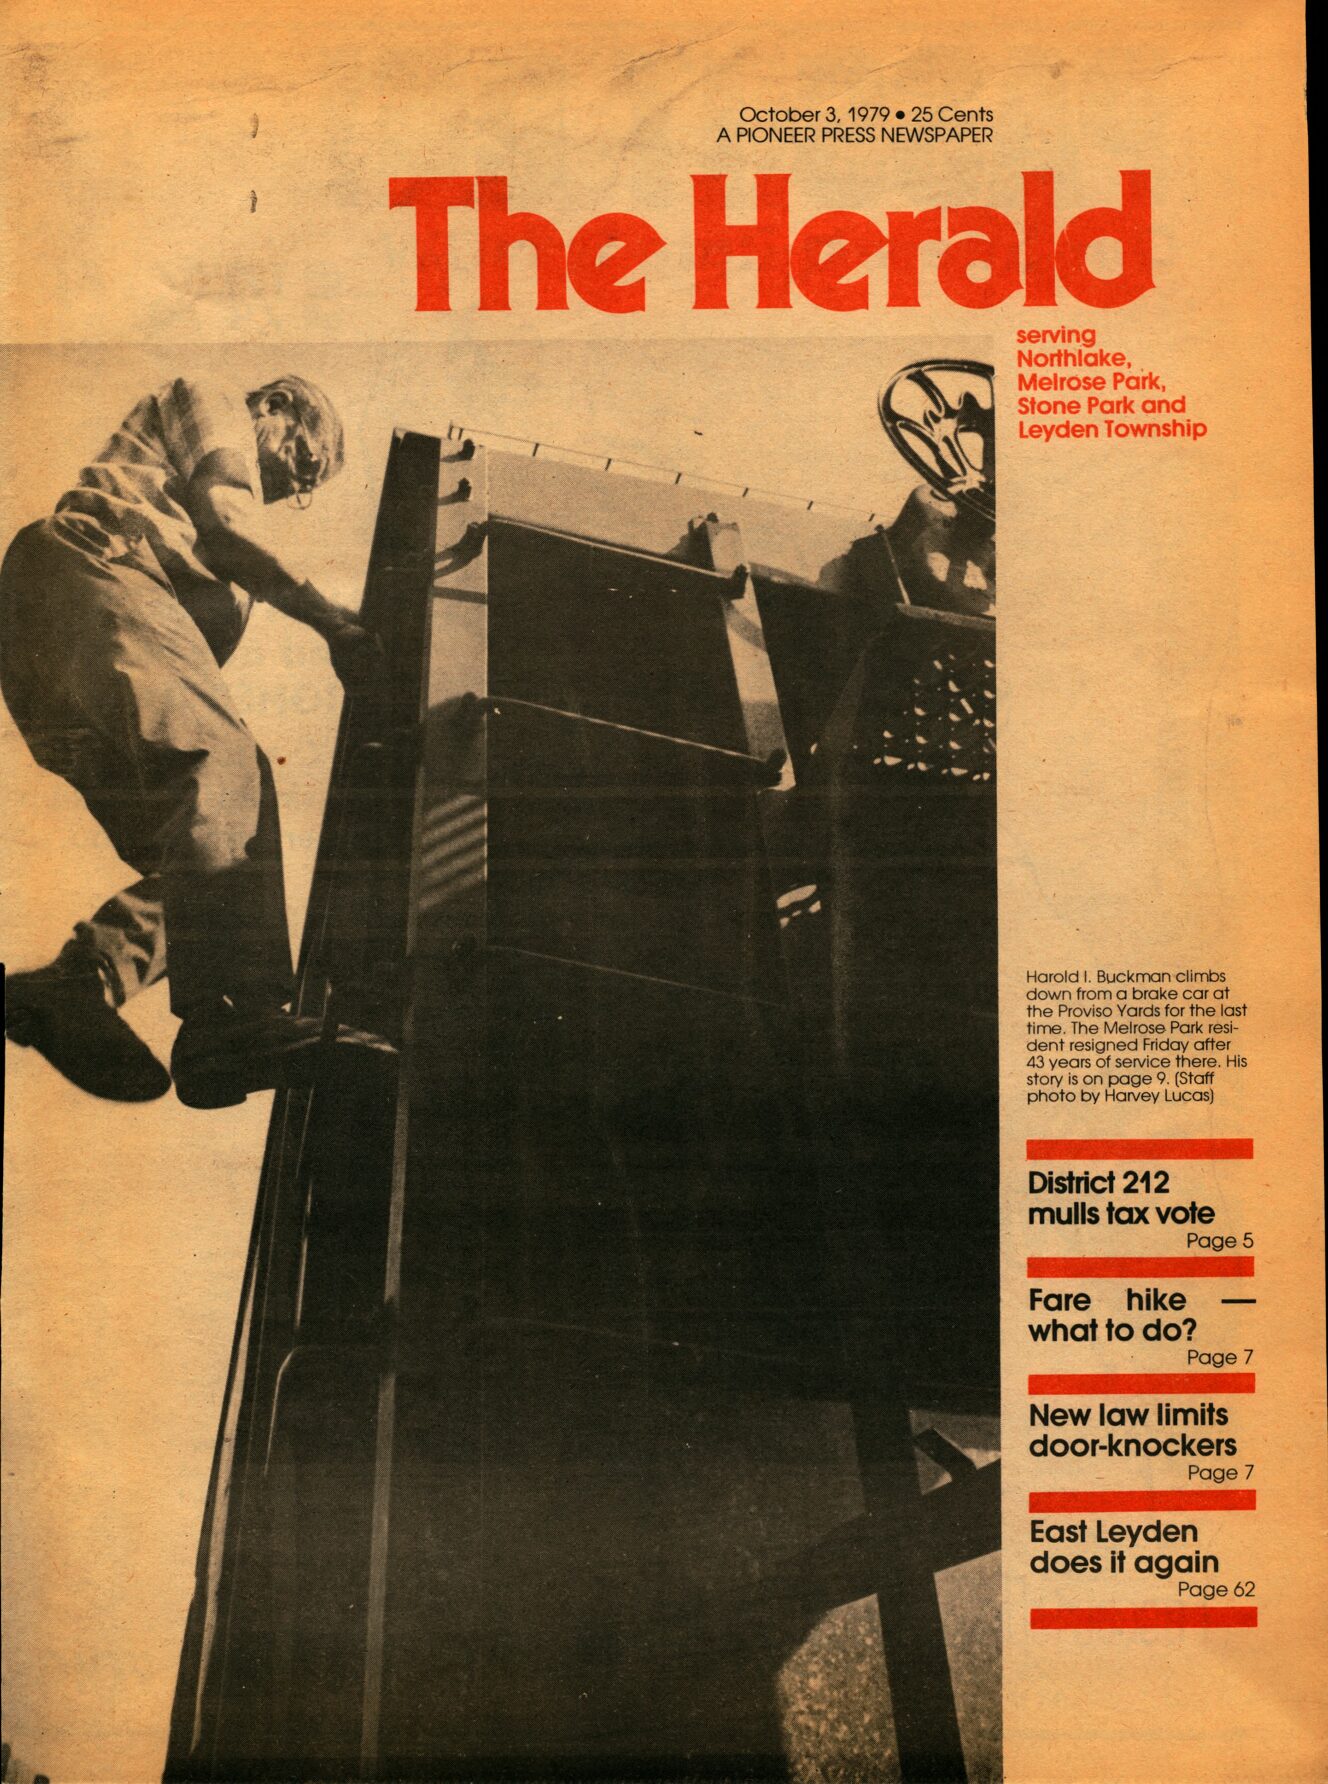 The Herald – 19791003